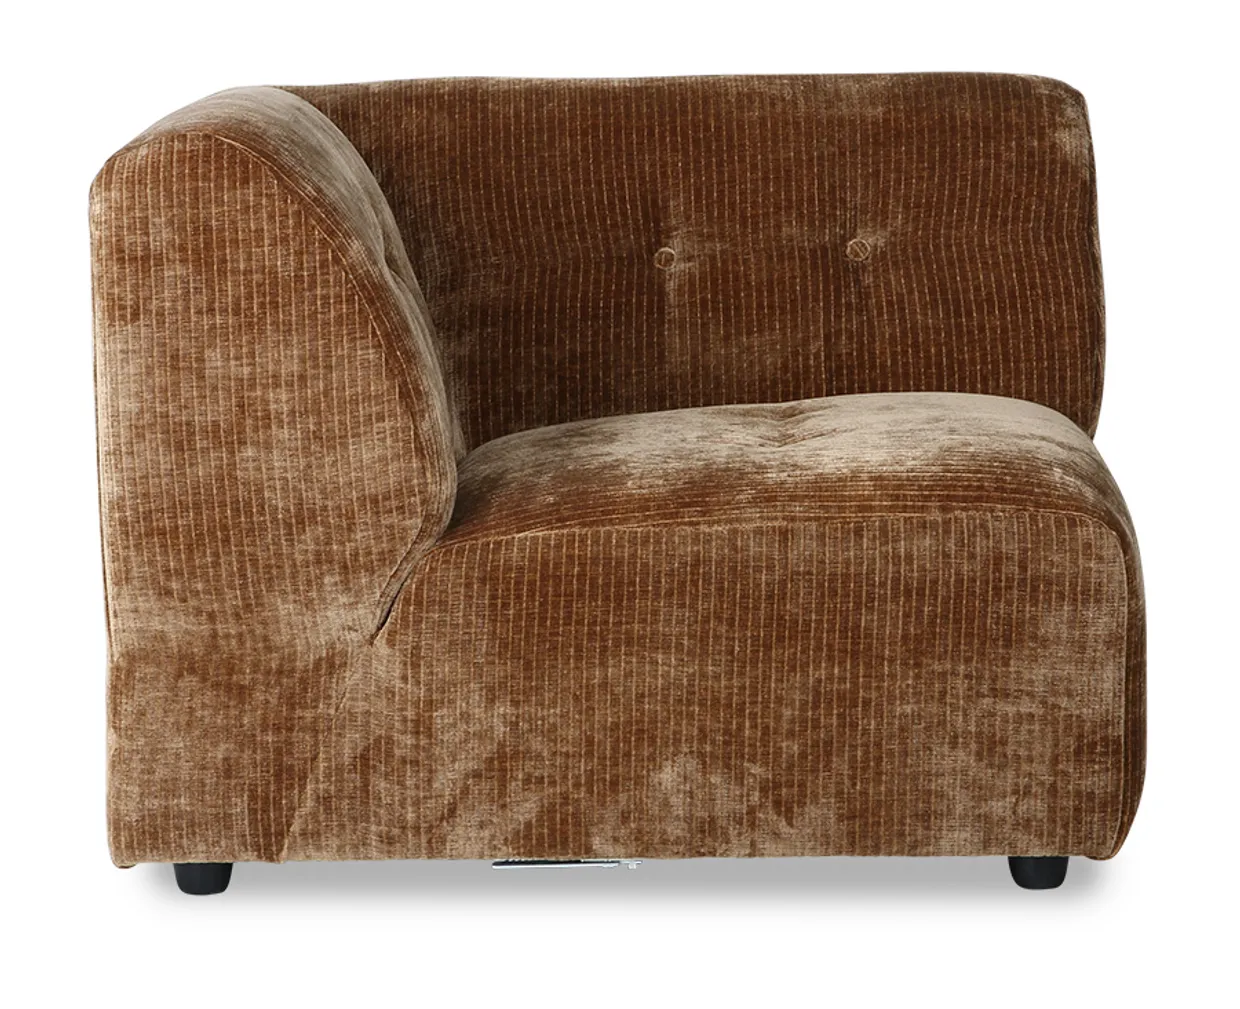 Vint couch: element right, corduroy velvet, aged gold